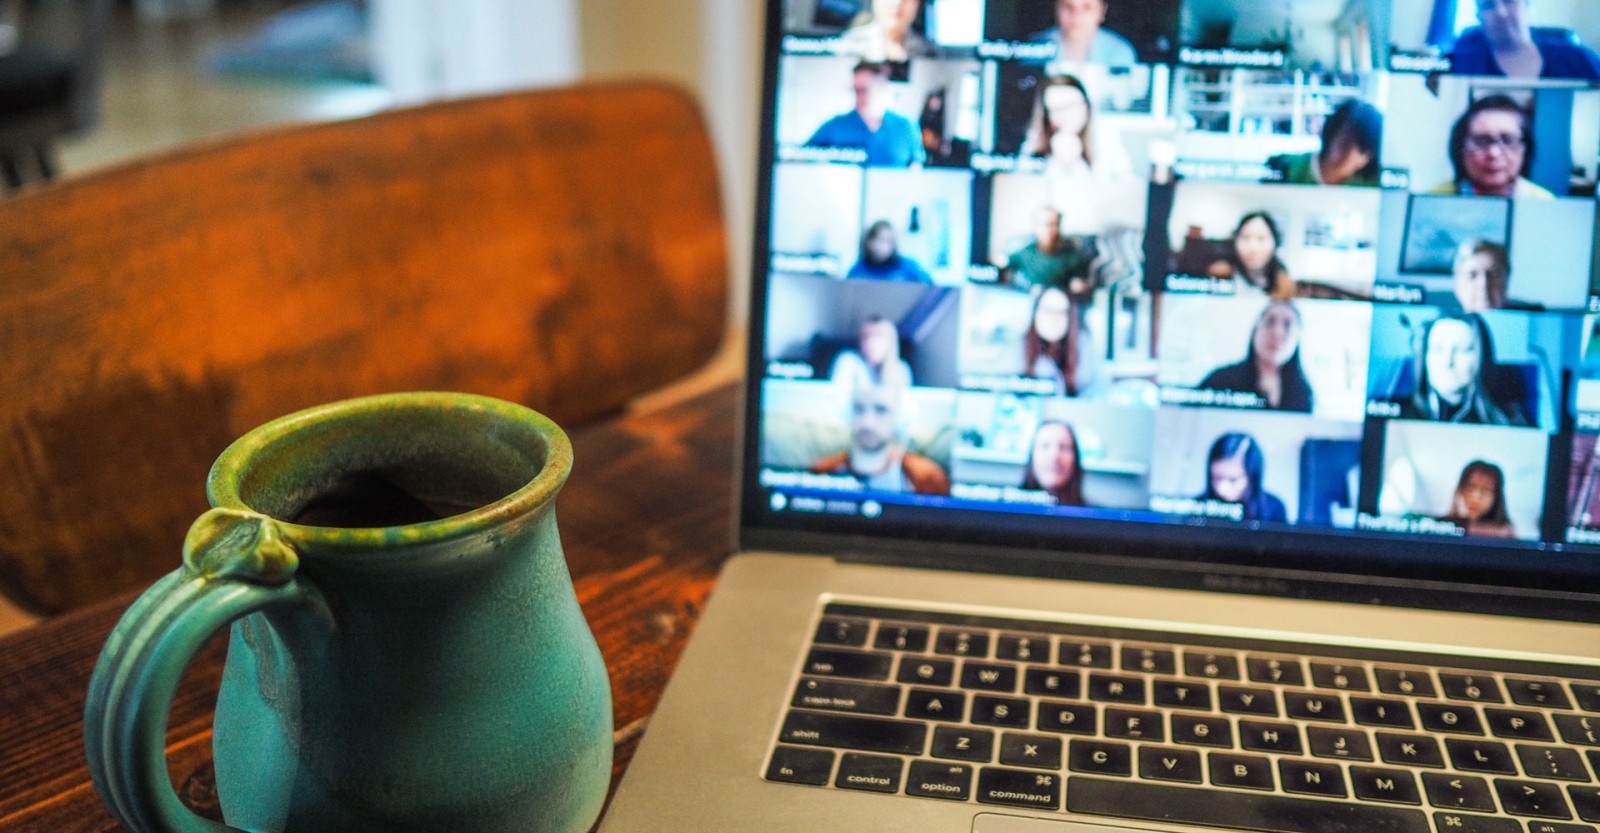 online meeting with mug of coffee